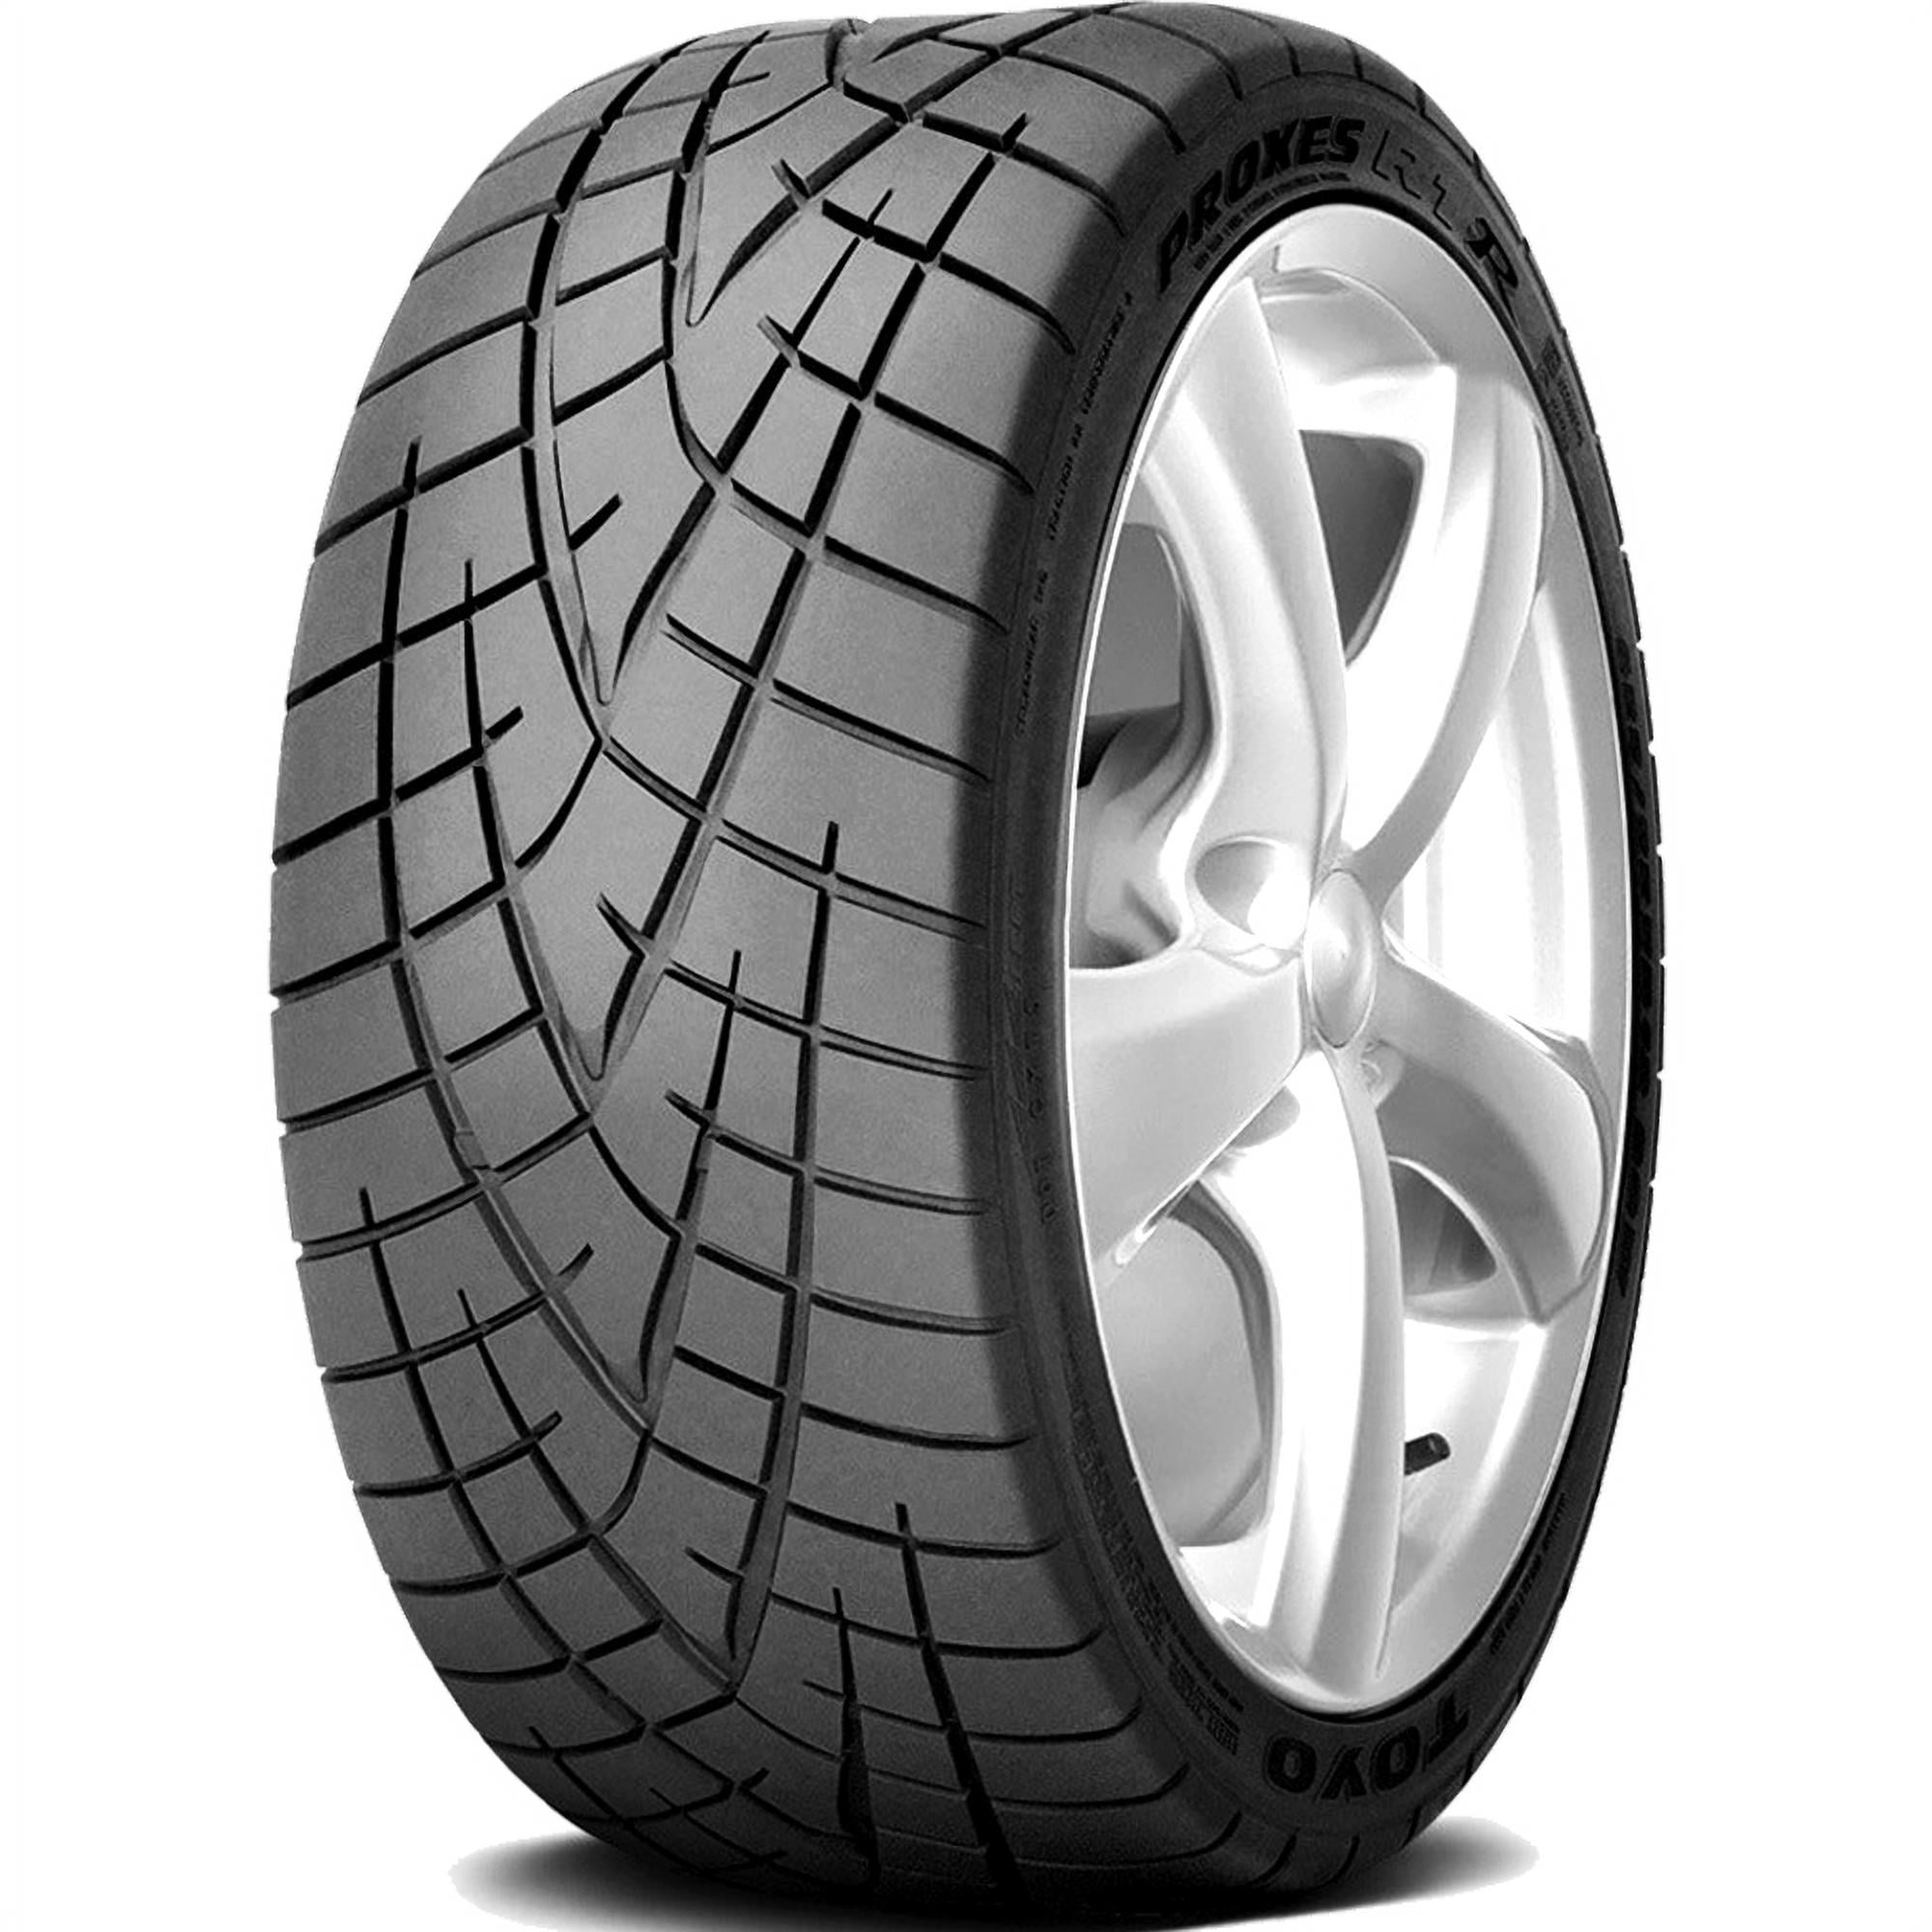 Toyo Proxes R1R P225/45ZR16 225/45R16 89W High Performance Tire 